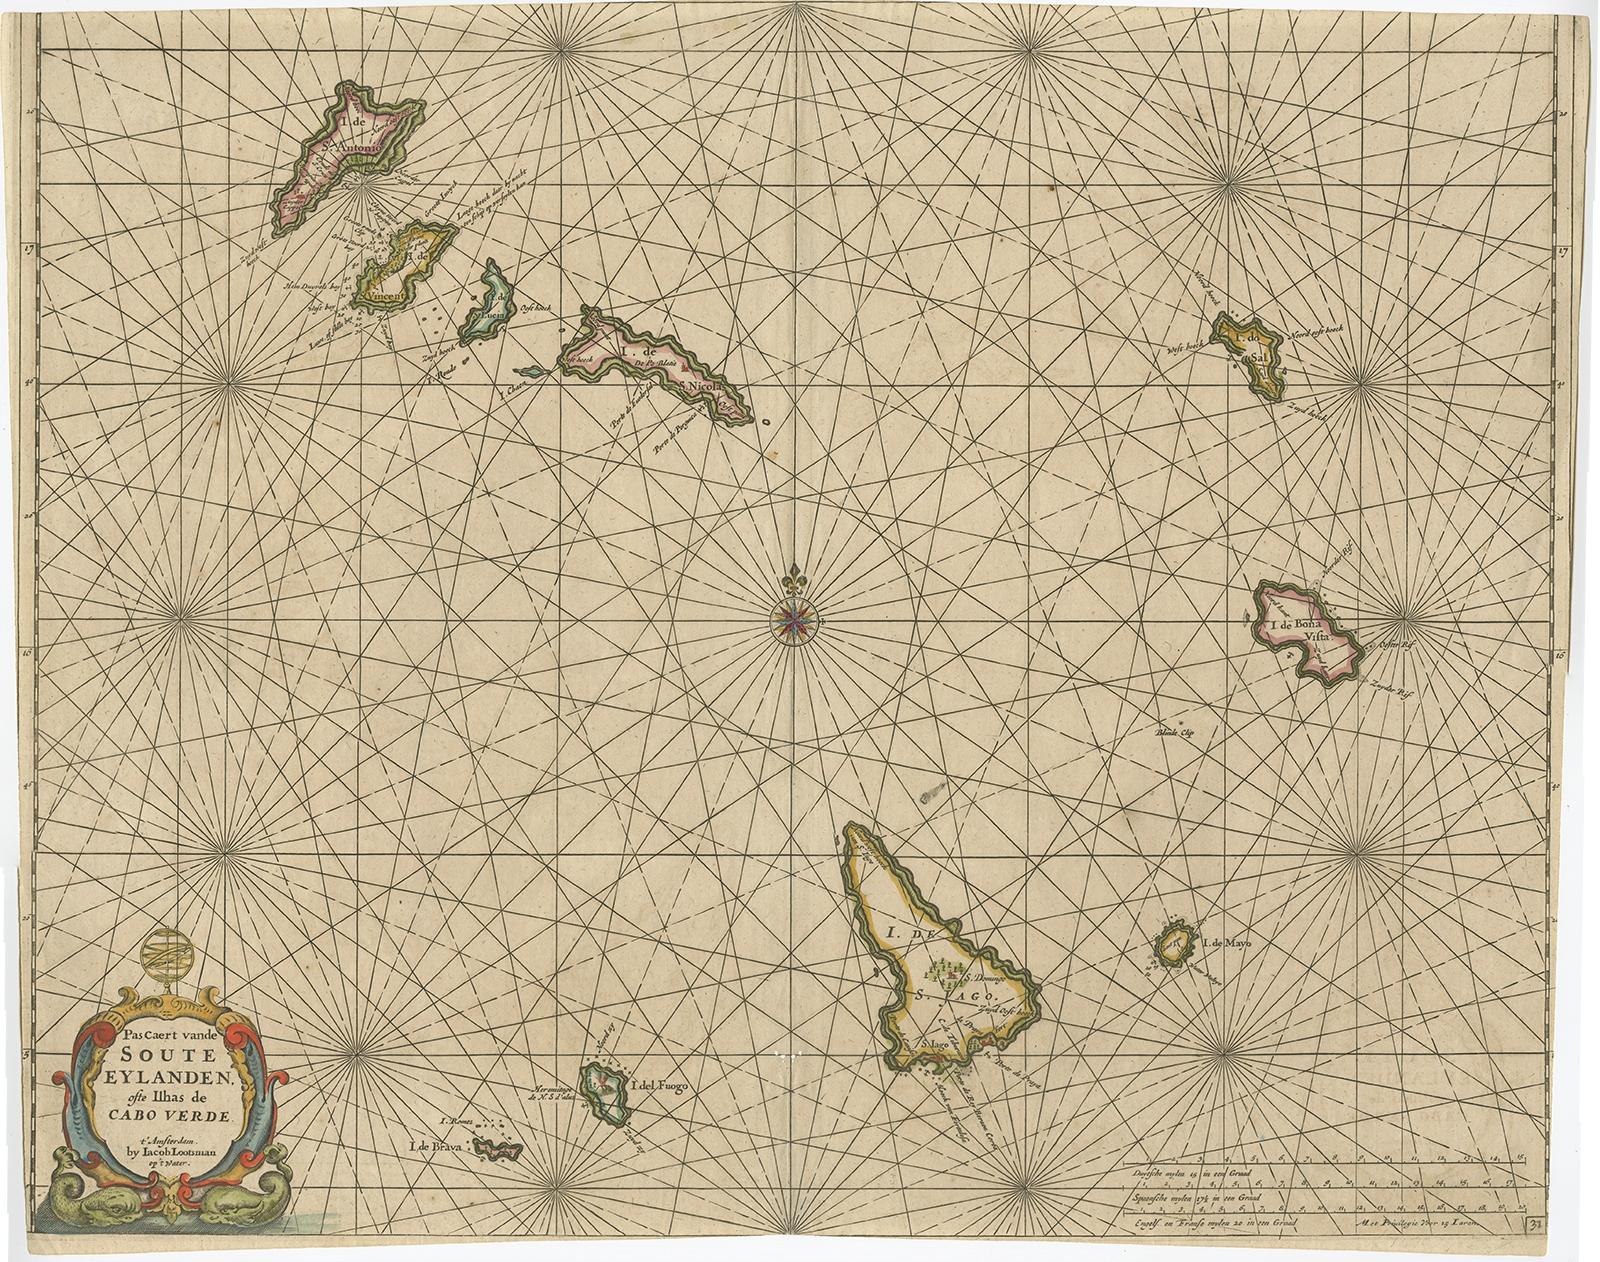 Antique map titled 'Pascaert van de Soute Eylanden ofte Ilhas de Cabo Verde'. 

This map depicts the Cape Verde Islands (Africa). Islands titled 'Ile de Brava, Ile del Fuogo, Ile de St. Jago, Ile de Mayo, Ile de Bona Vista, Ile do Sal, Ile de S.